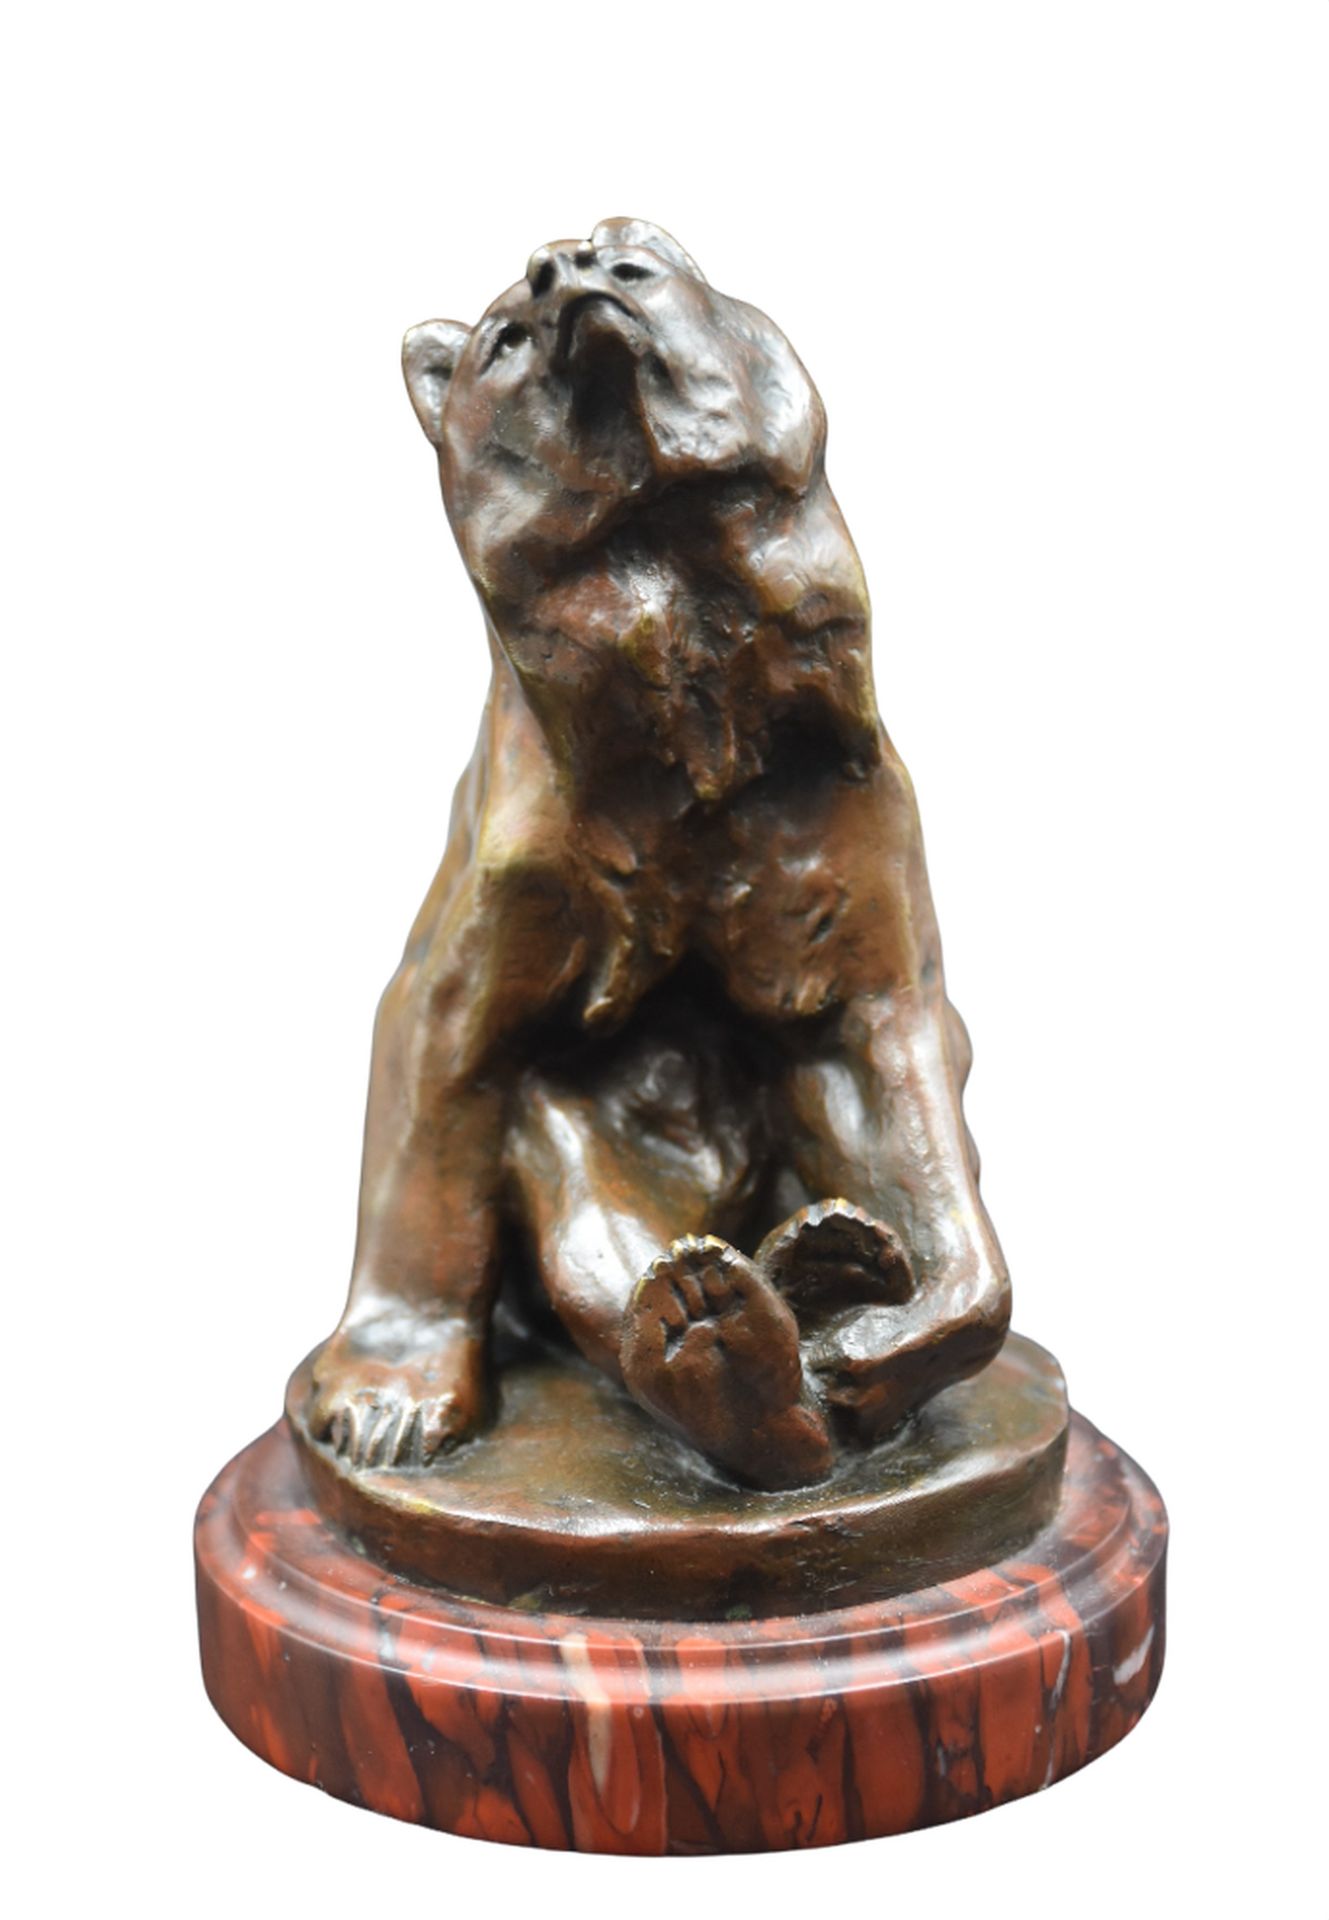 Gérard GARDET. Gérard GARDET.青铜制的熊，有棕色的铜锈。铸造厂印章Siot Paris 高：14.5厘米。 

NL: Gerard&hellip;